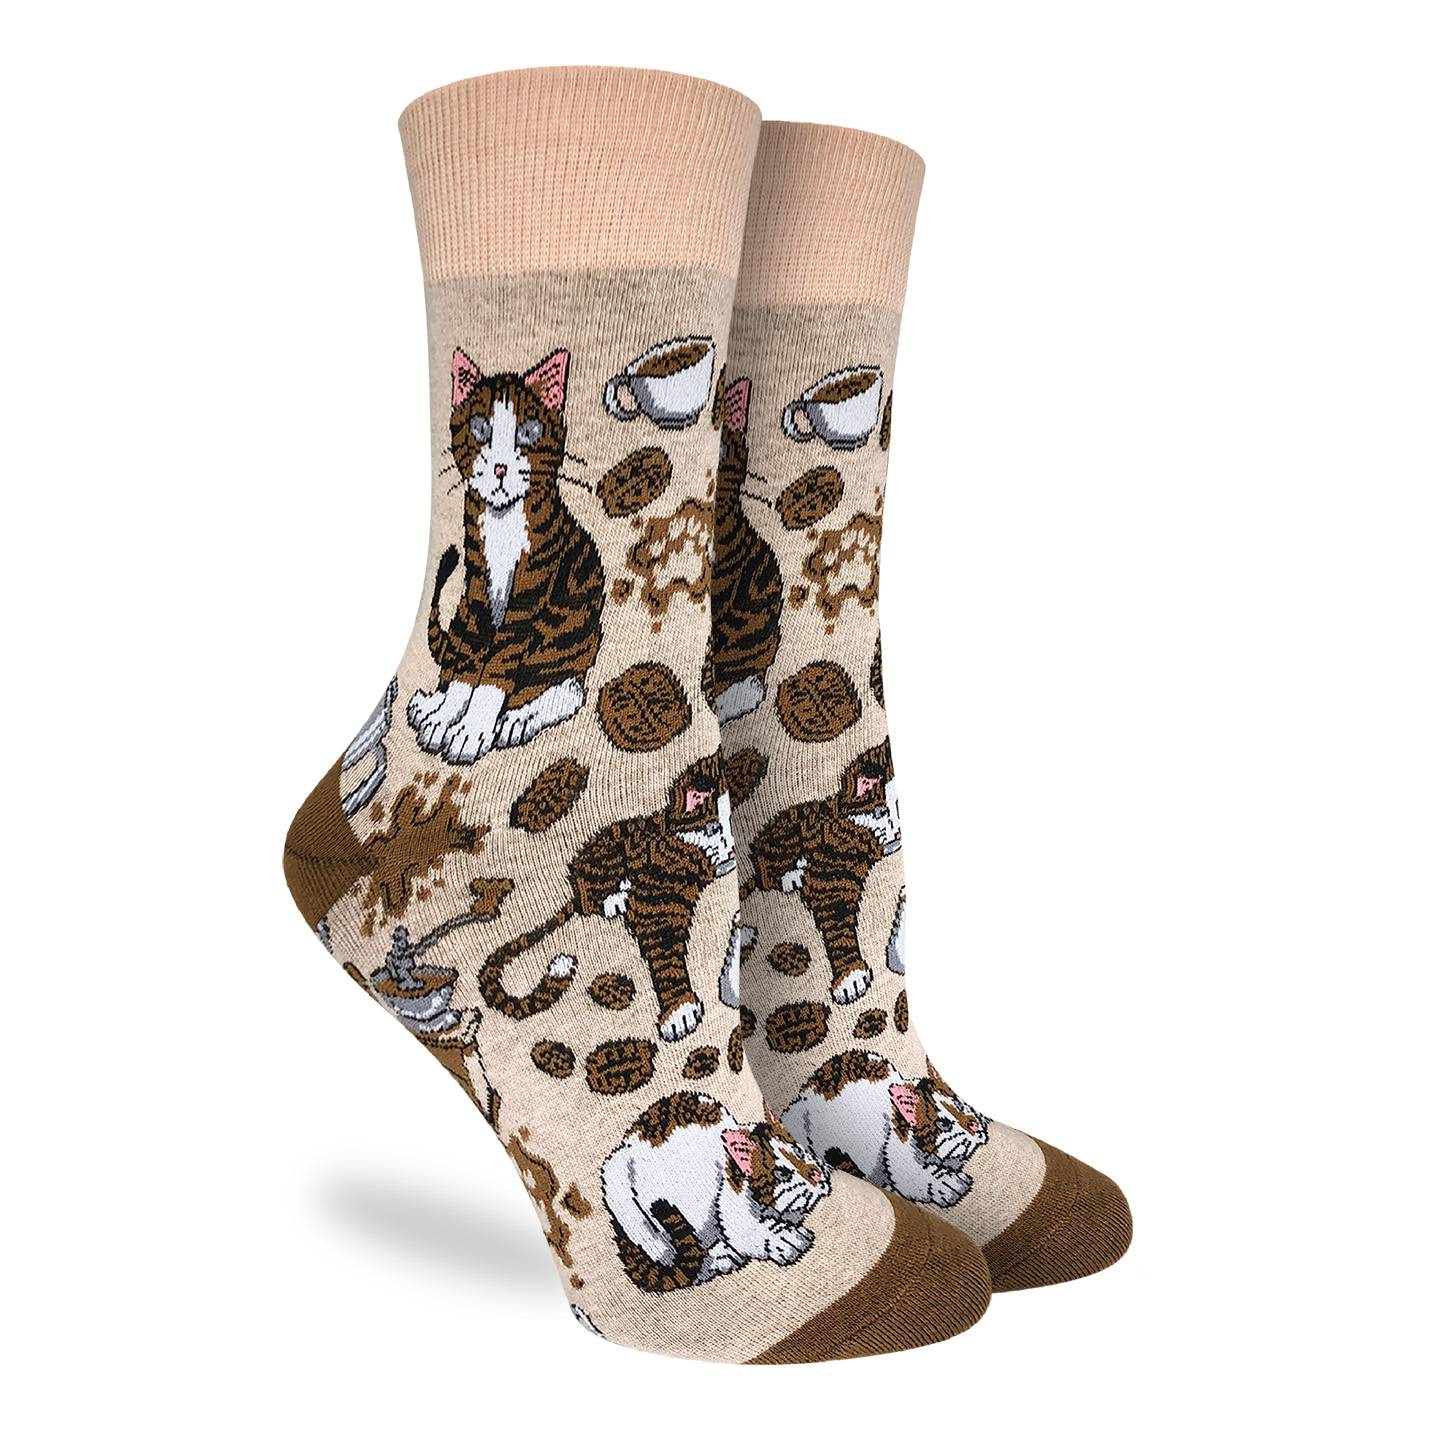 Good Luck Sock - Women's Coffee Cats Socks